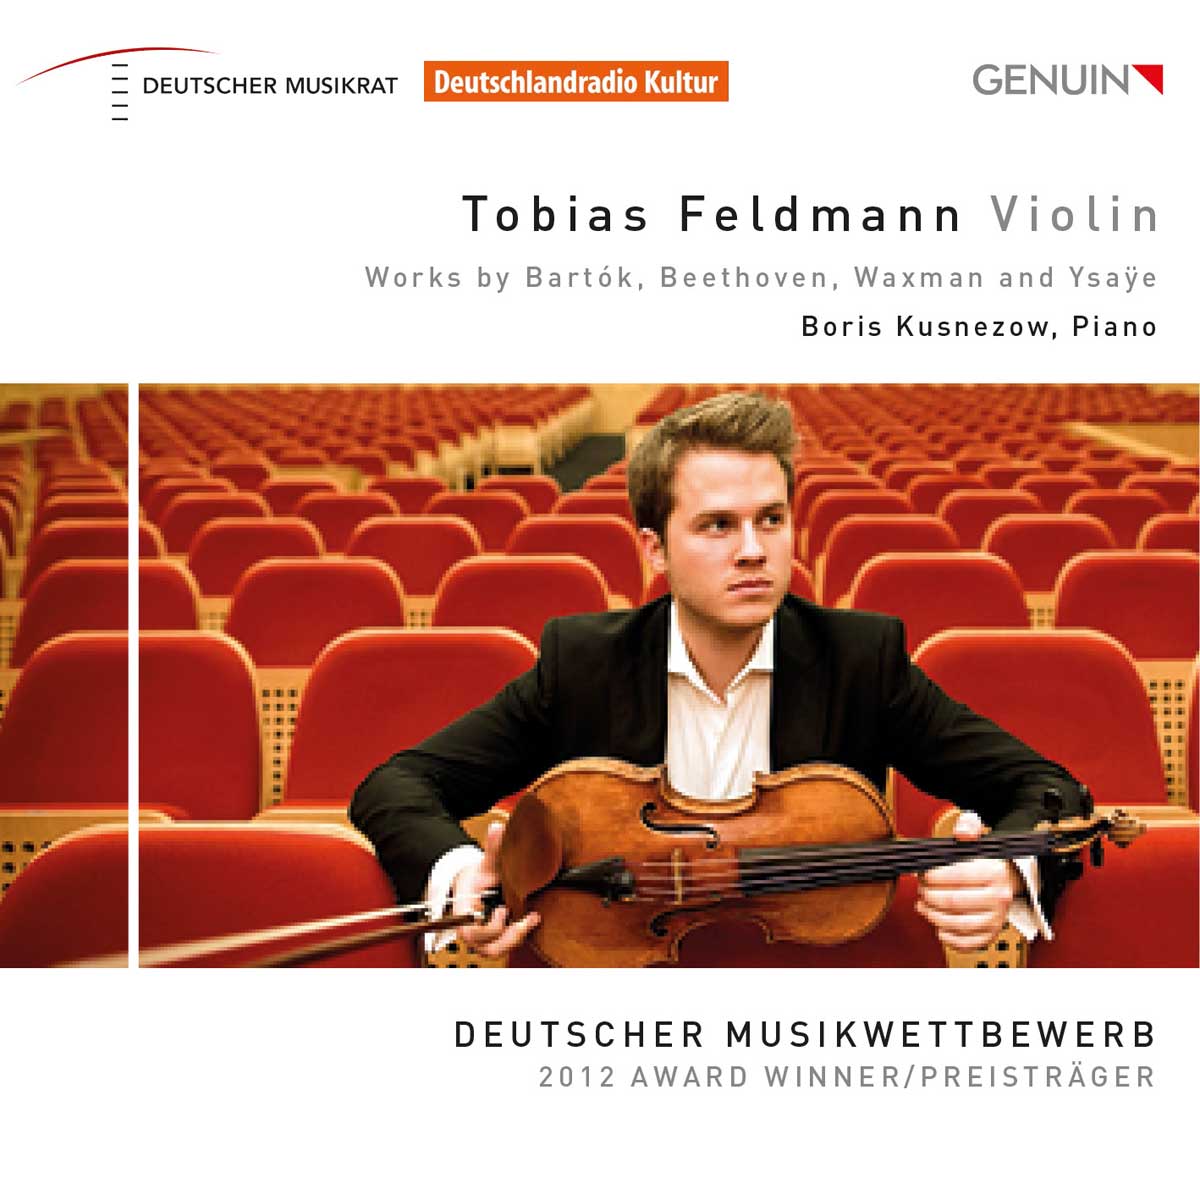 CD album cover 'Tobias Feldmann – Violine' (GEN 14316) with Tobias Feldmann, Boris Kusnezow